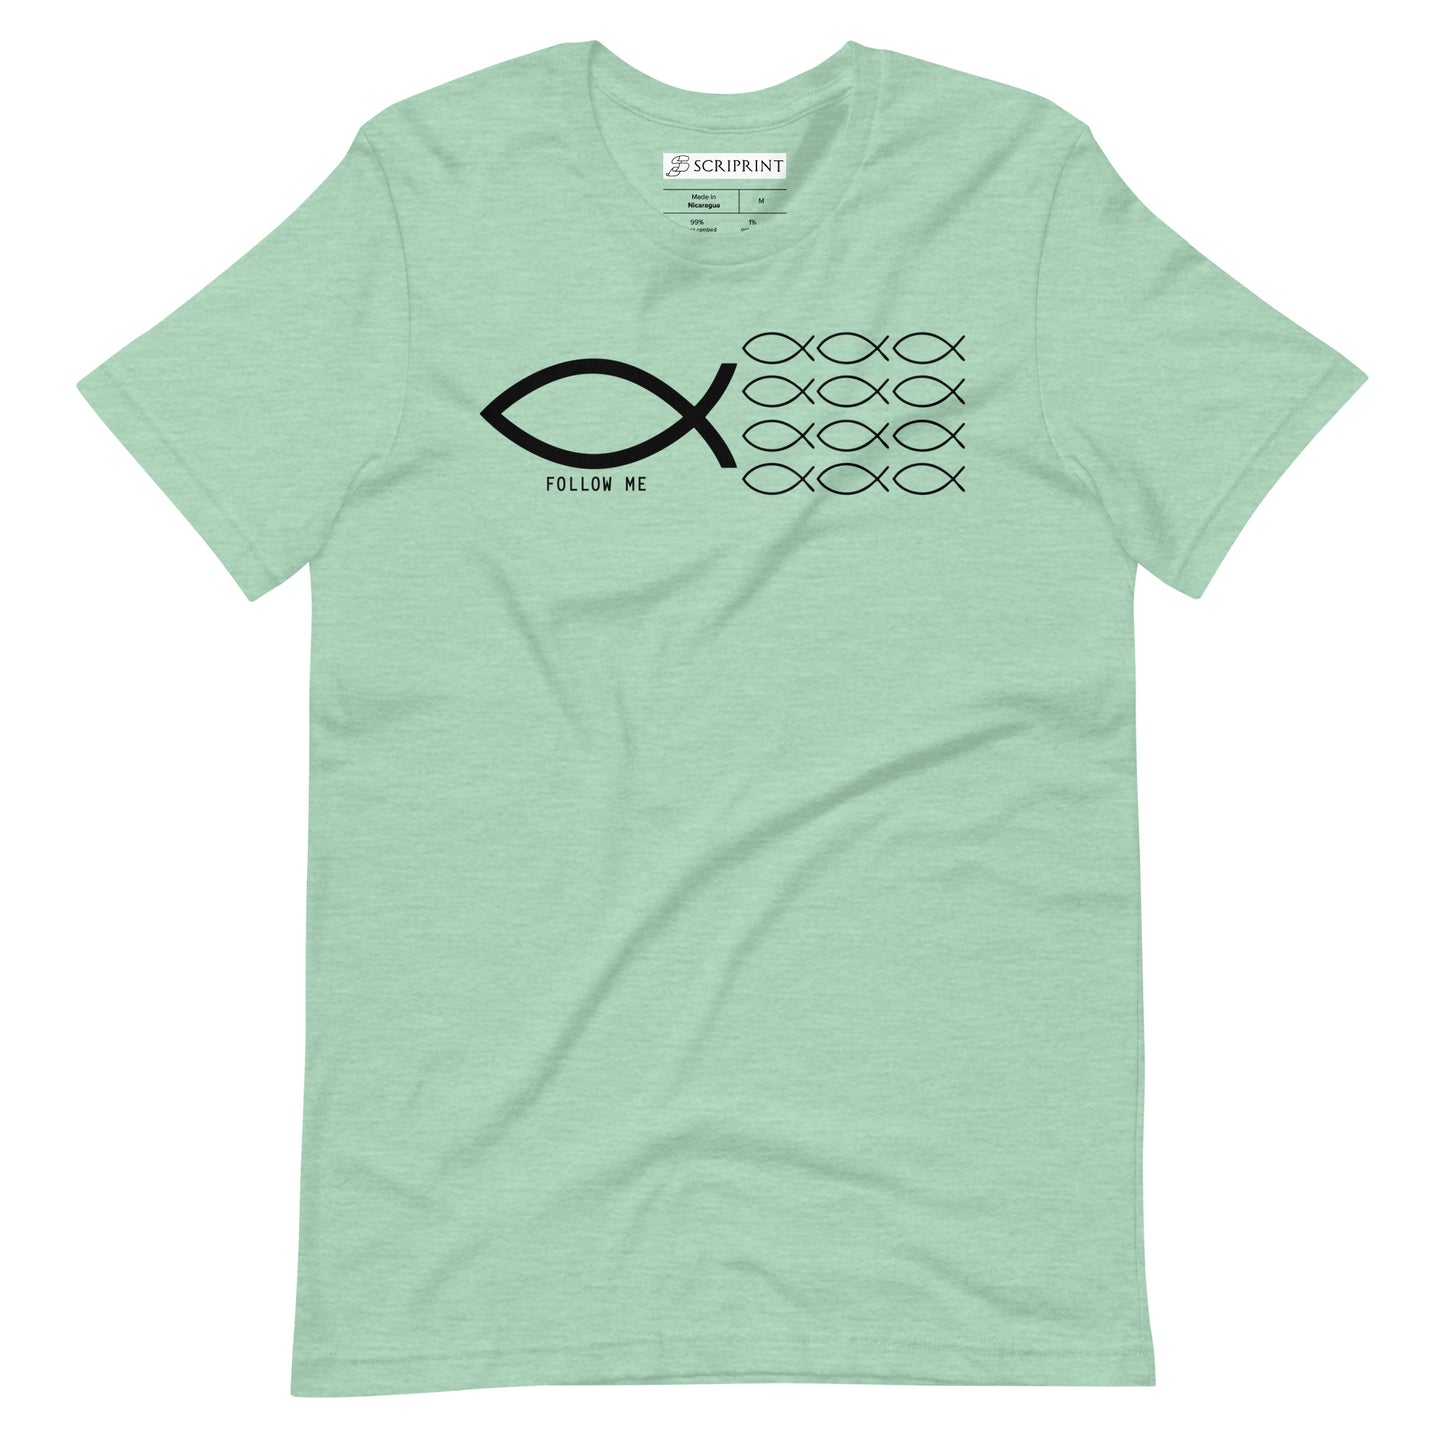 Follow Me (Light-Colored) Short-Sleeve Unisex T-Shirt